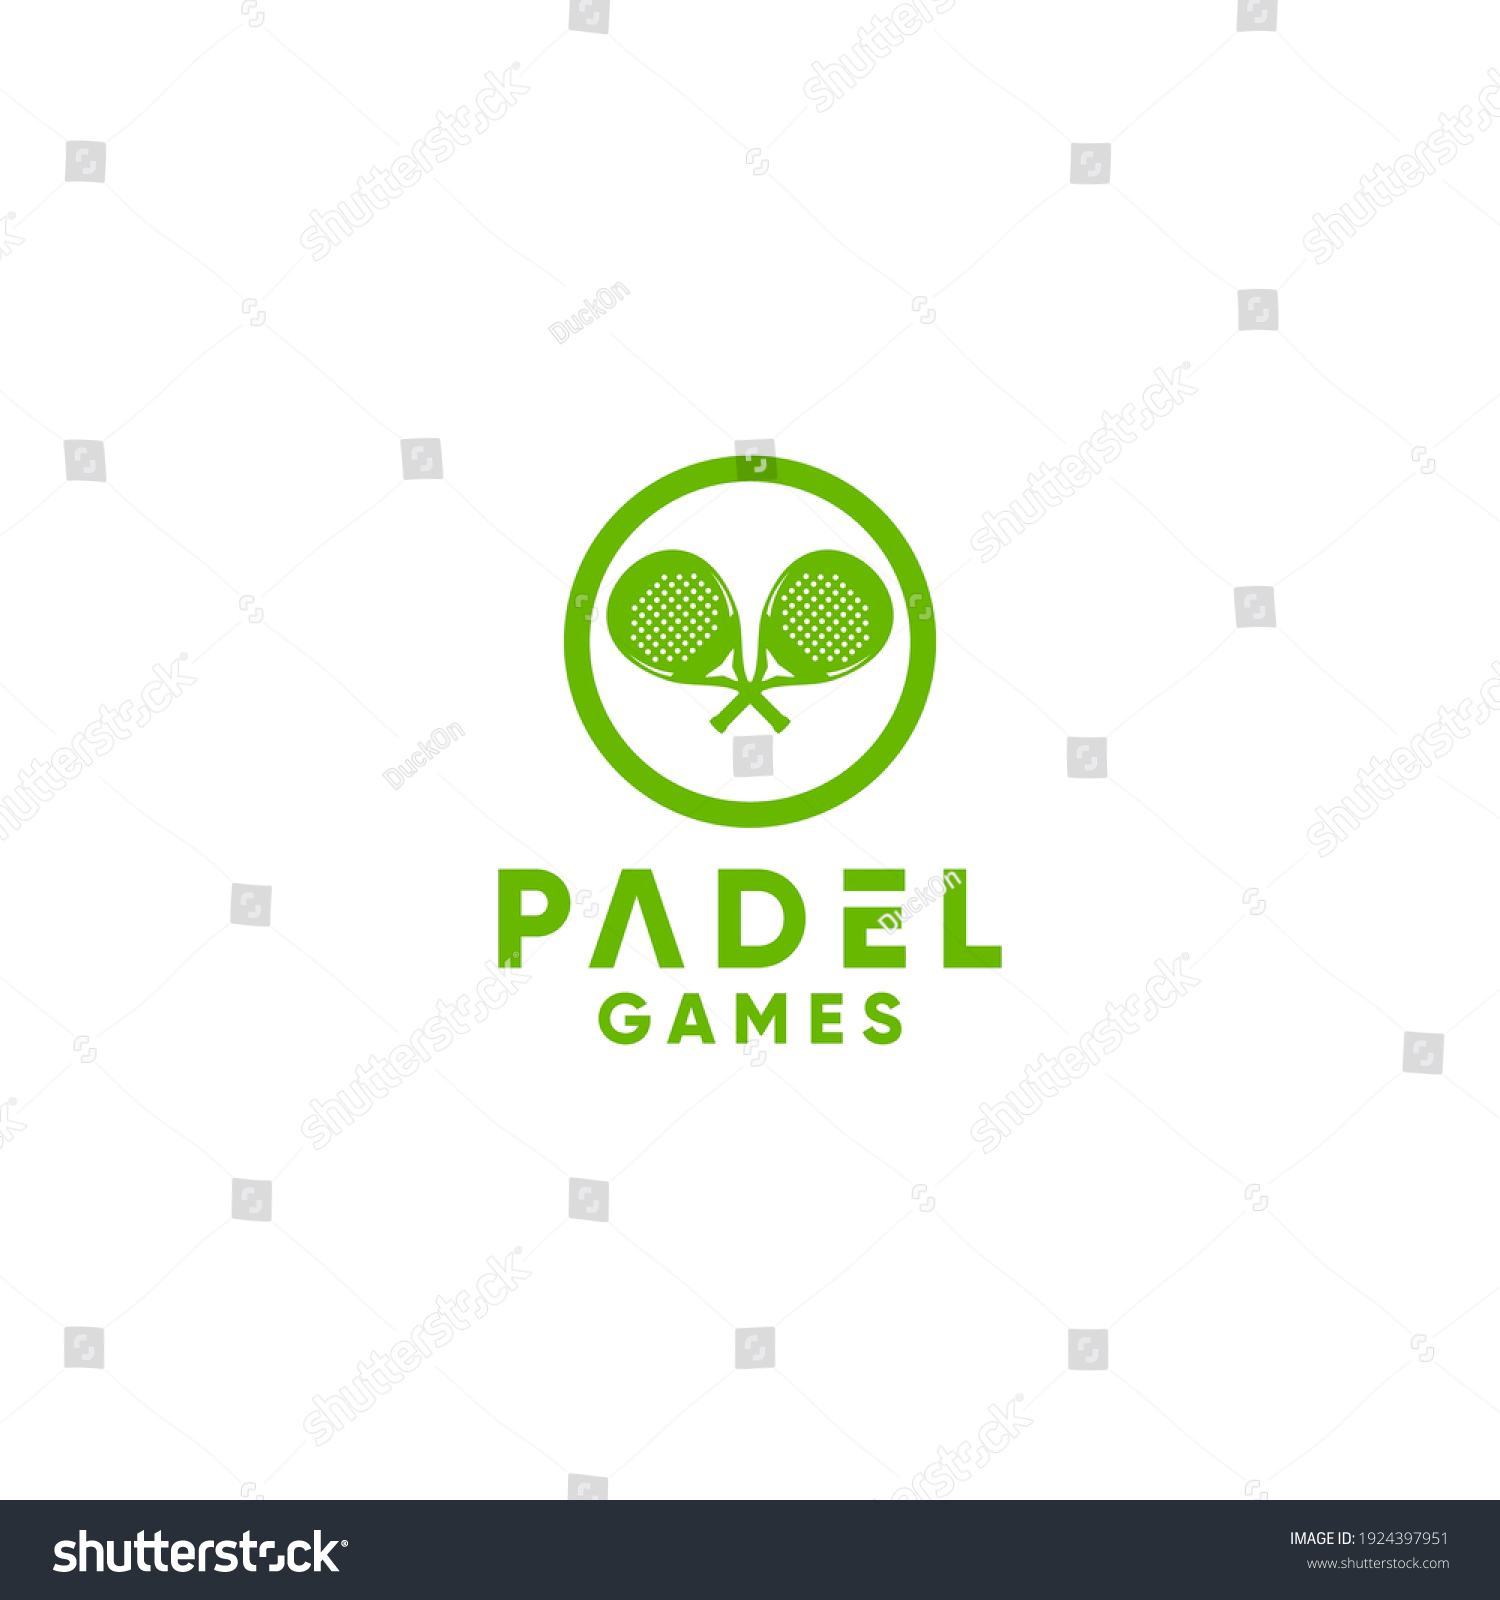 Tennis logo Images, Stock Photos & Vectors | Shutterstock ( https://www.shutterstock.com › search › tennis+logo ) 